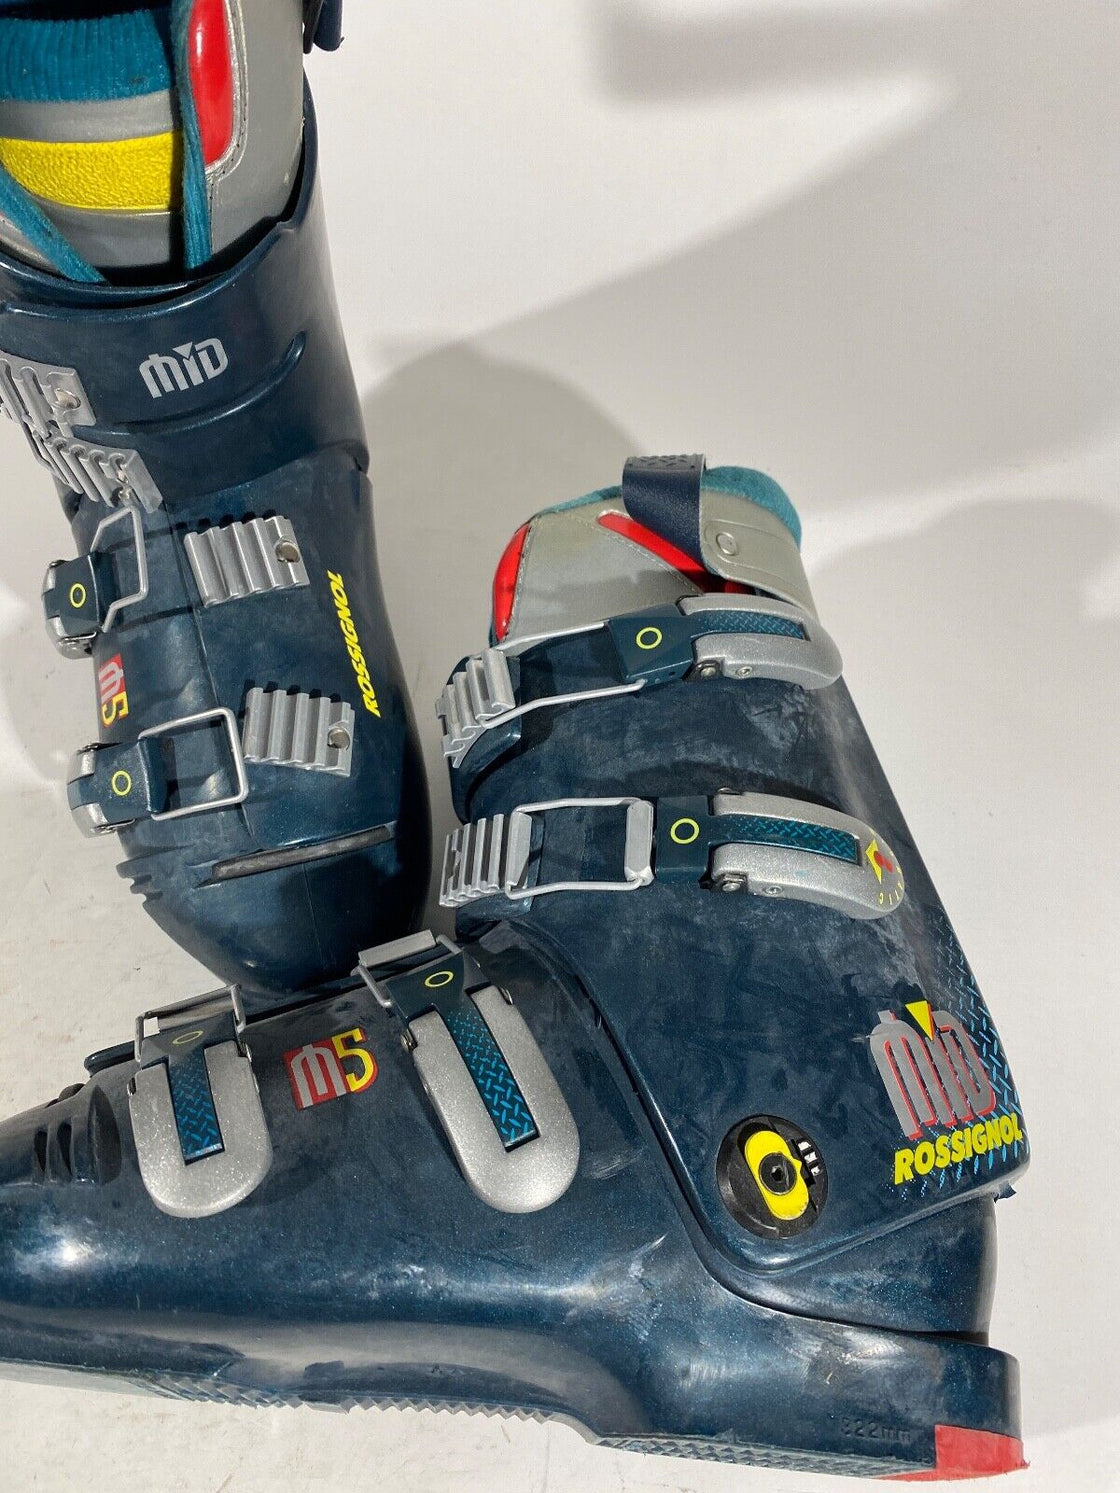 ROSSIGNOL Alpine Ski Boots Downhill Size Mondo 278 mm, Outer Sole 322 mm